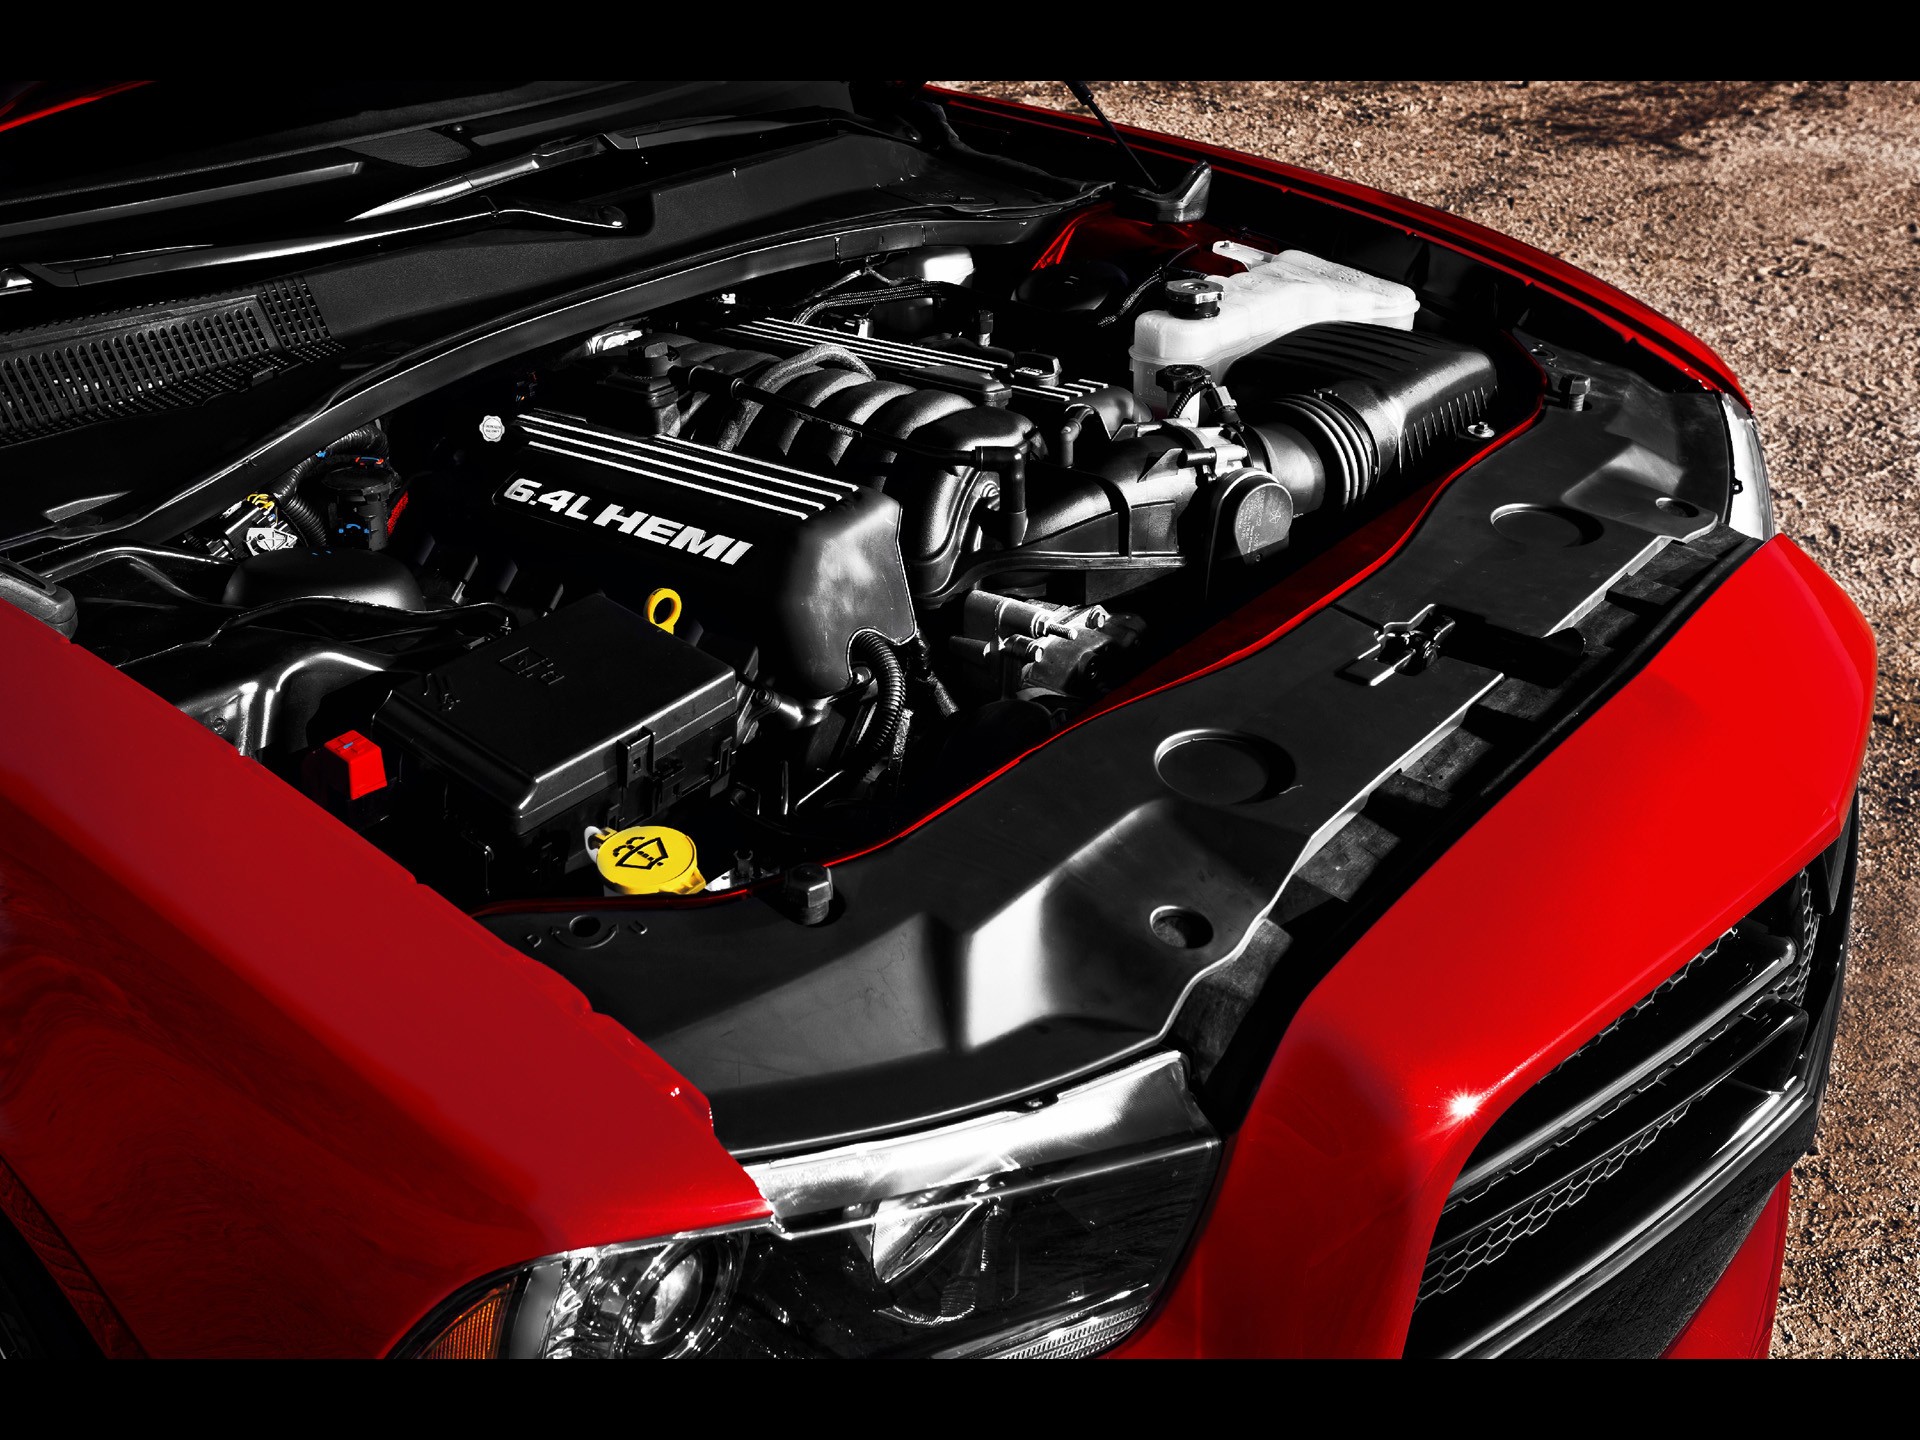 engines, muscle cars, Dodge Charger - desktop wallpaper